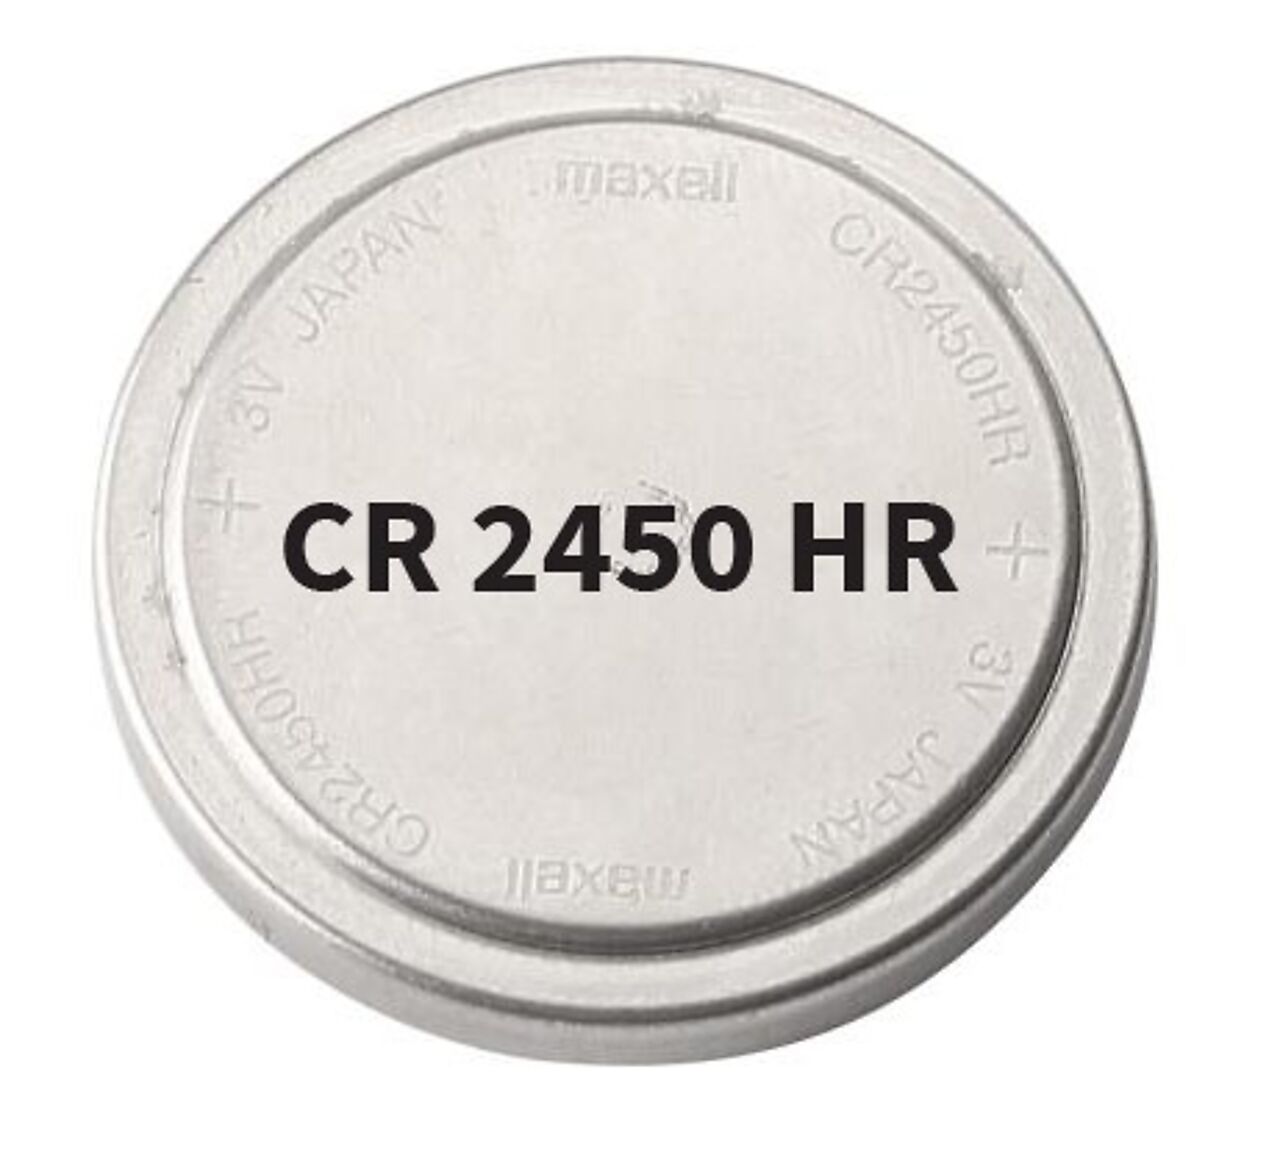 Altech Altech Aqualarm batteri CR 2450 HR 1